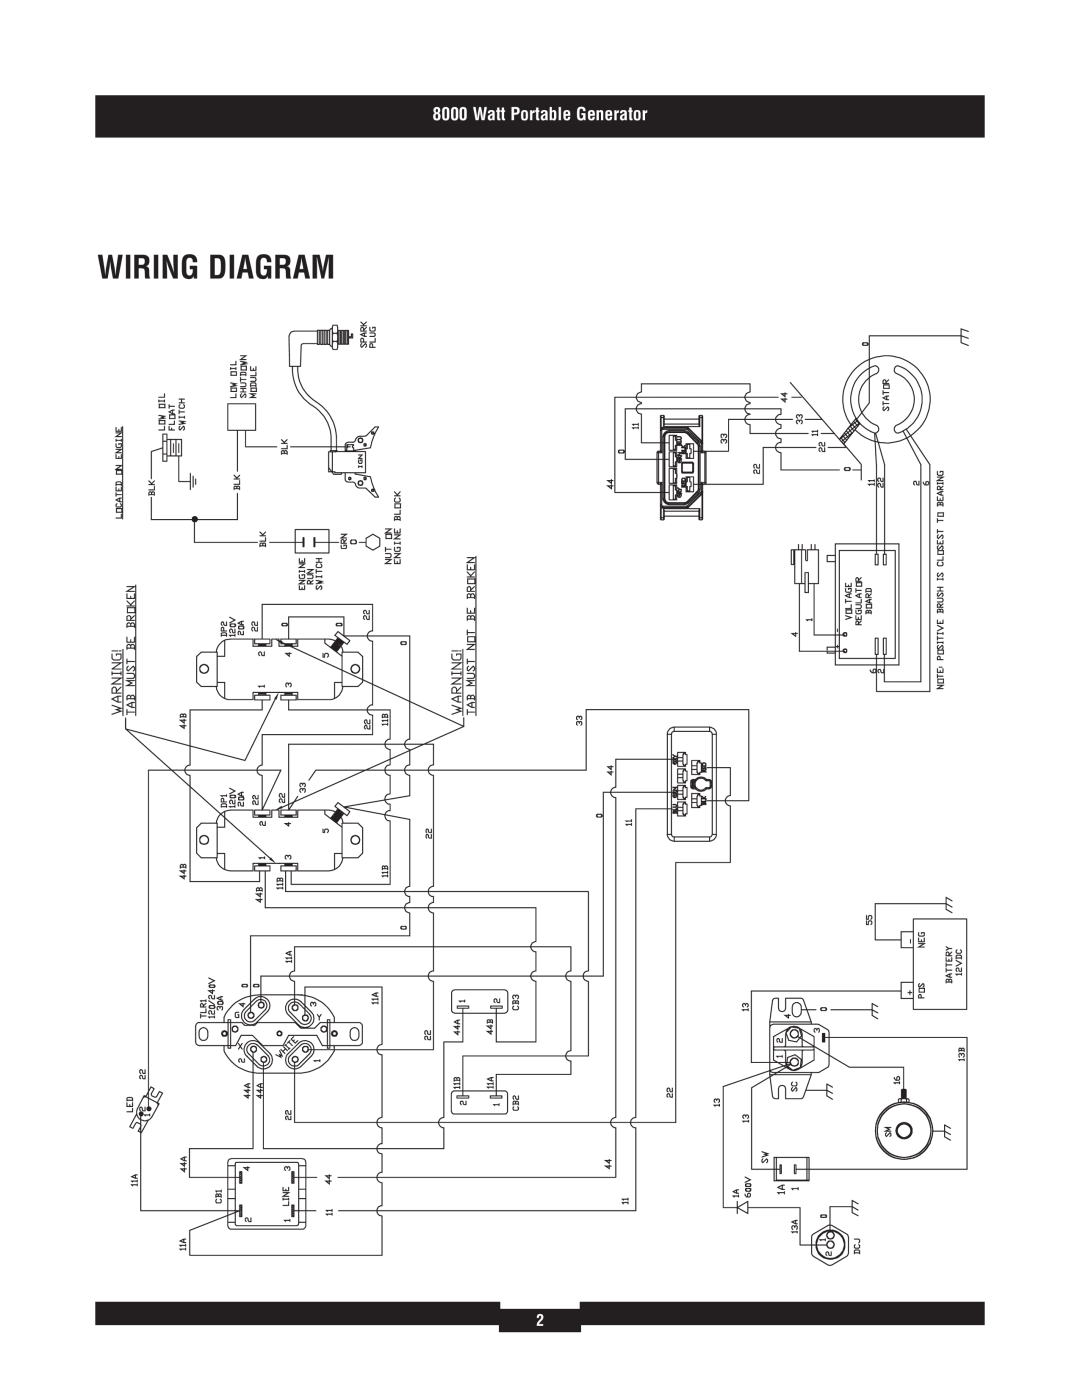 Briggs & Stratton 030334 manual Wiring Diagram, Watt Portable Generator 